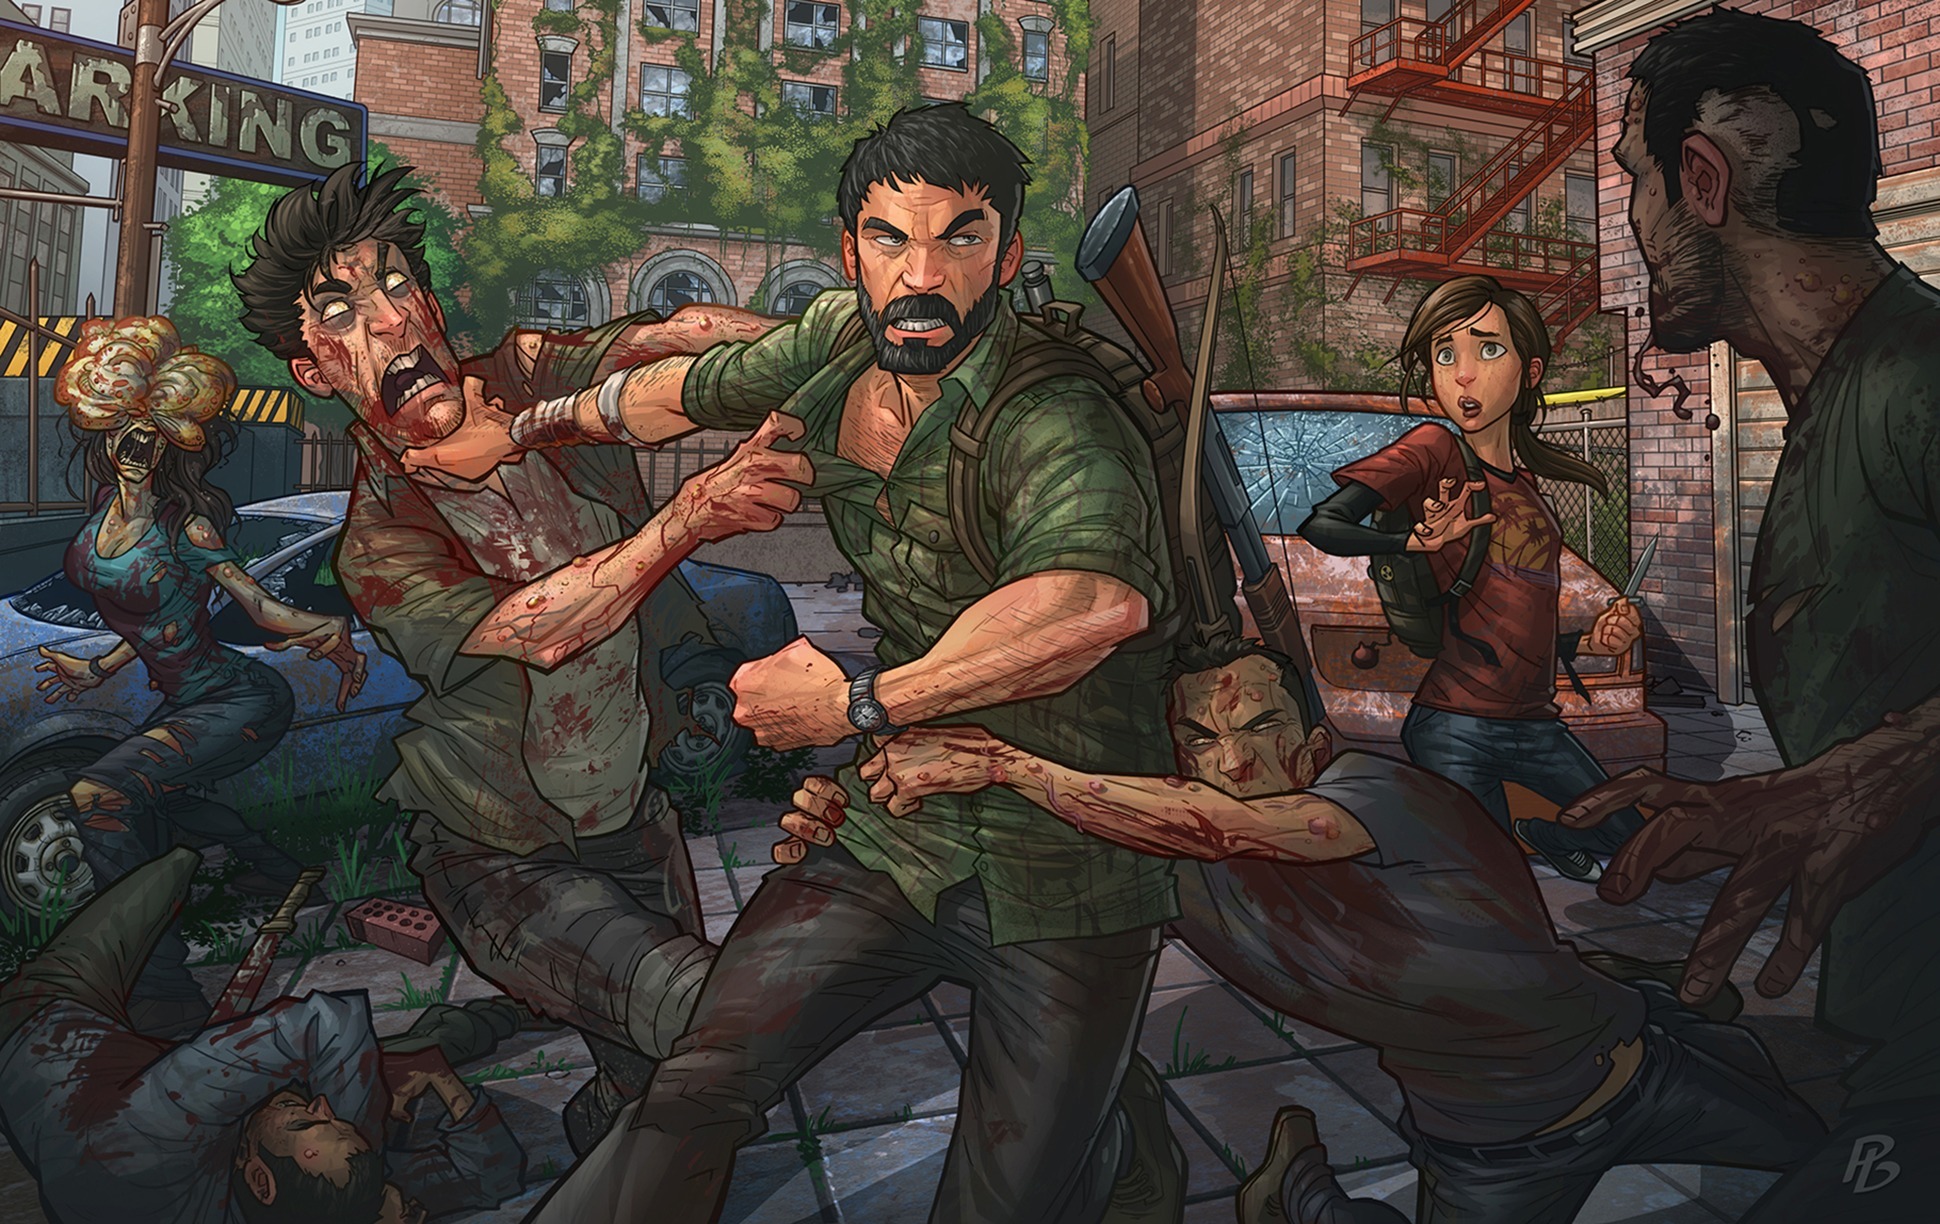 The Last of Us Joel wallpaper The Last of Us #Joel video games #4K # wallpaper #hdwallpaper #desktop